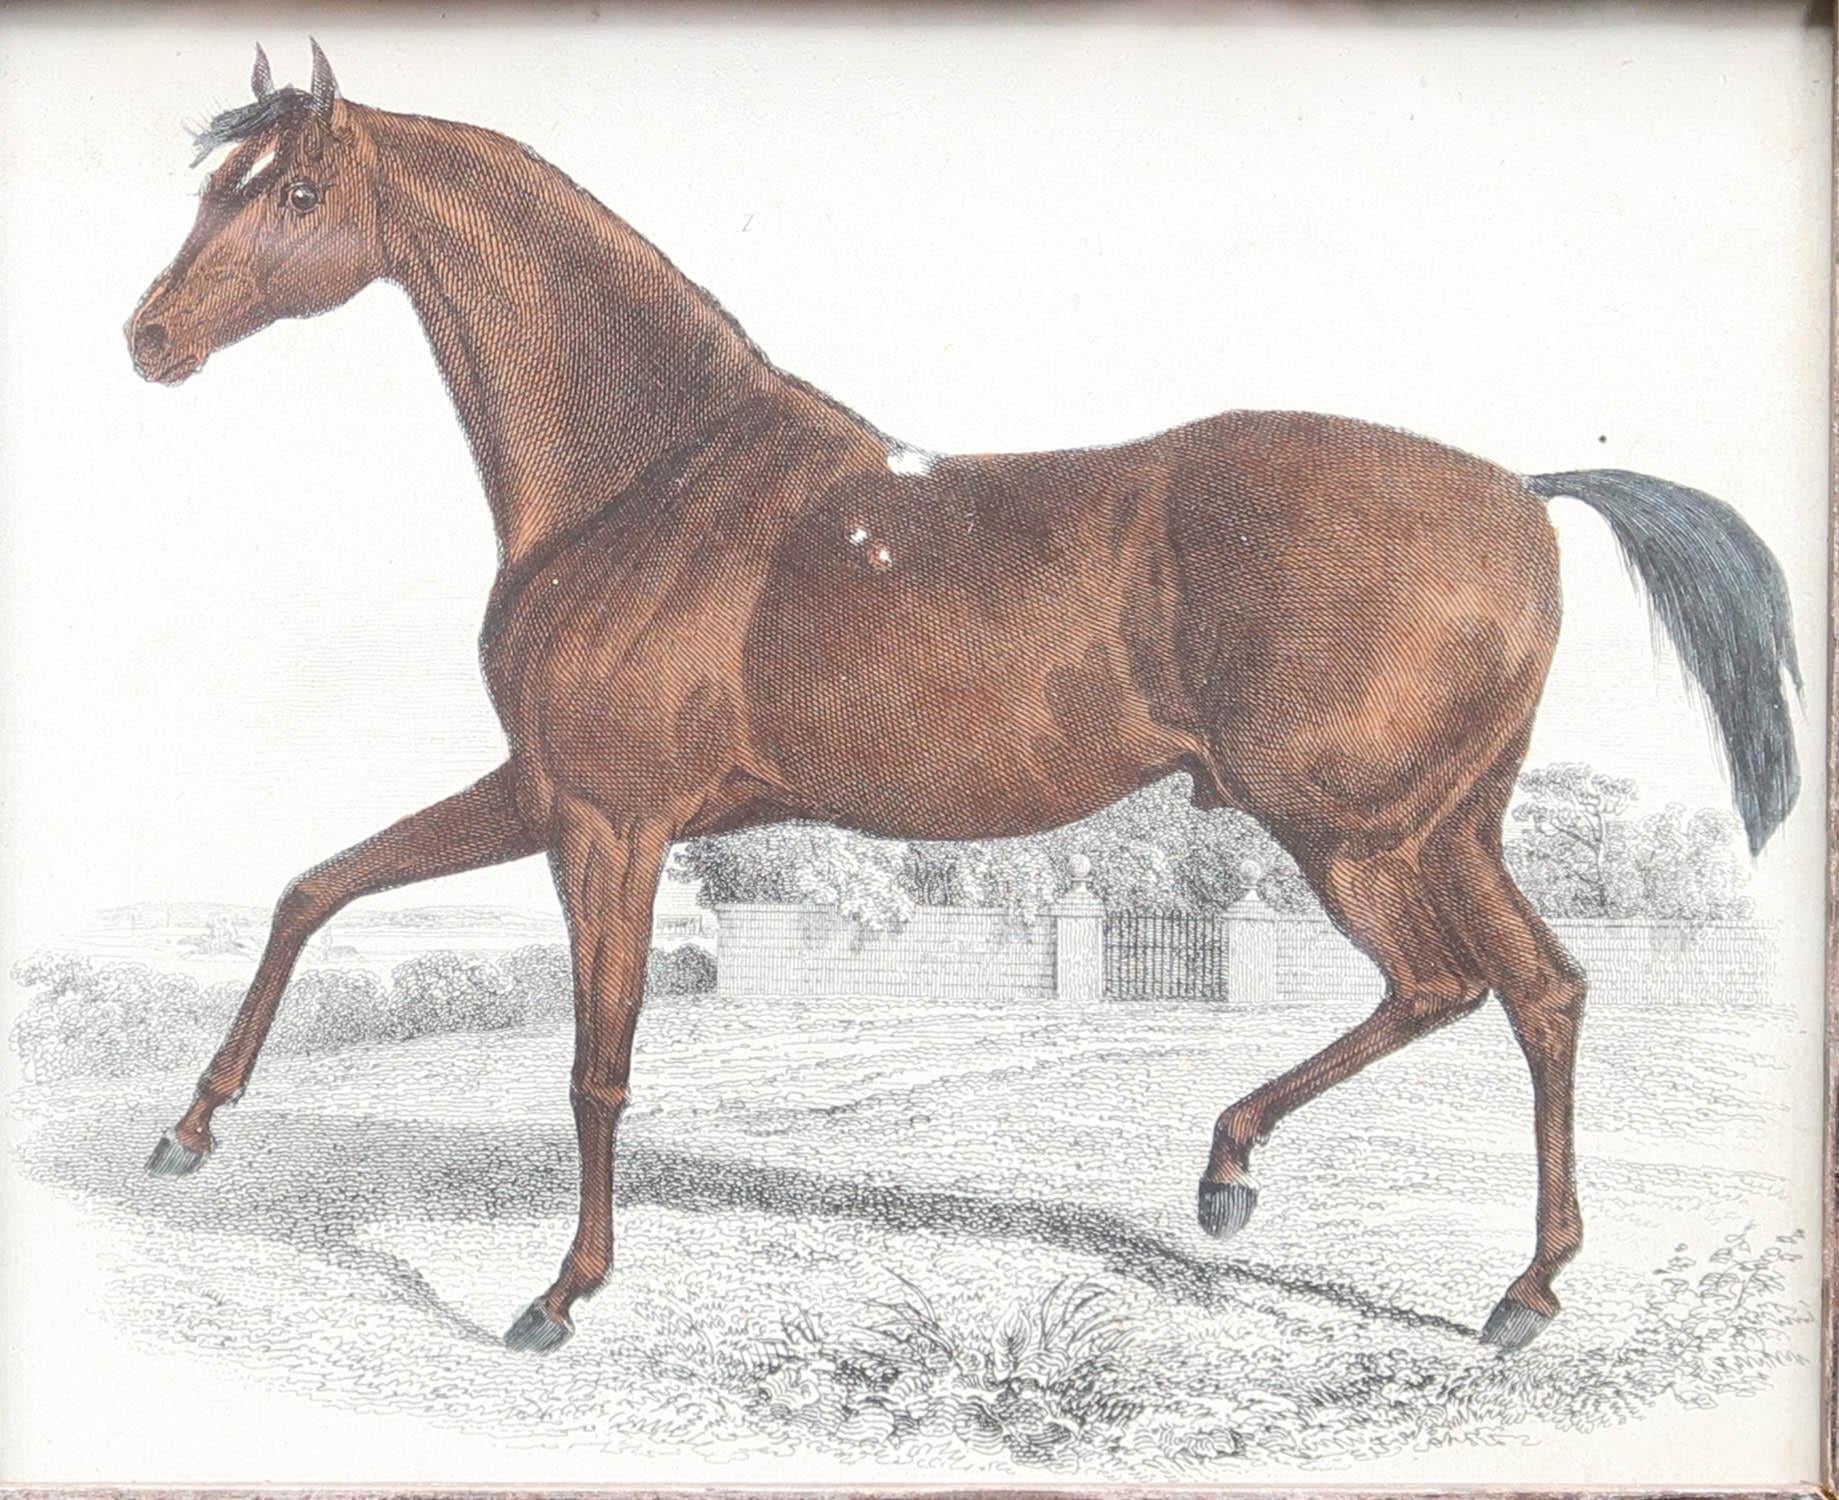 Folk Art Original Antique Print of a Racehorse, 1847